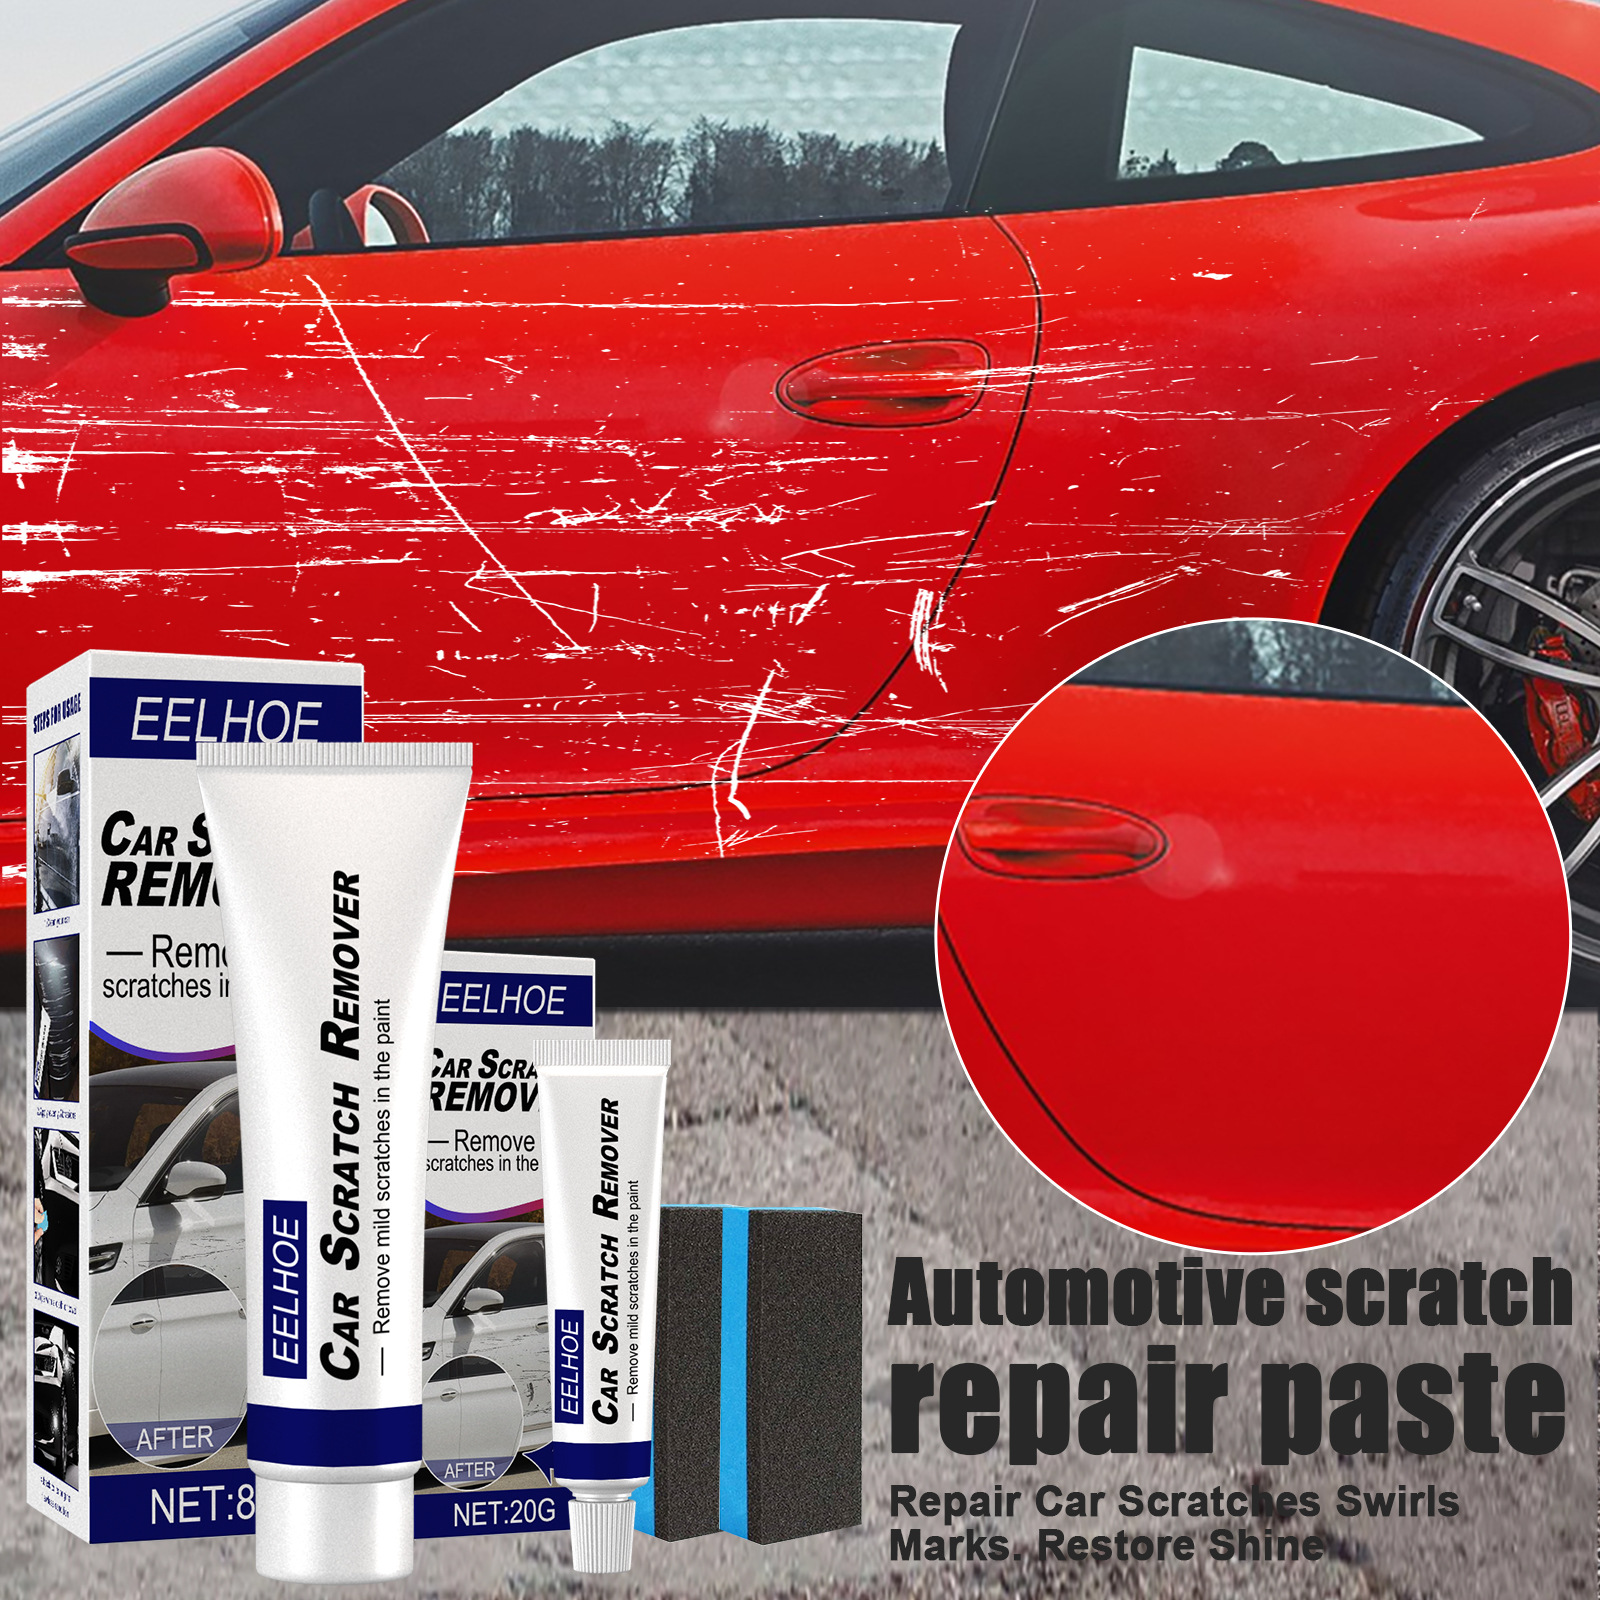 Professional Car Scratch Repair Polishing Kit 80g - BUY 2 GET 1 FREE